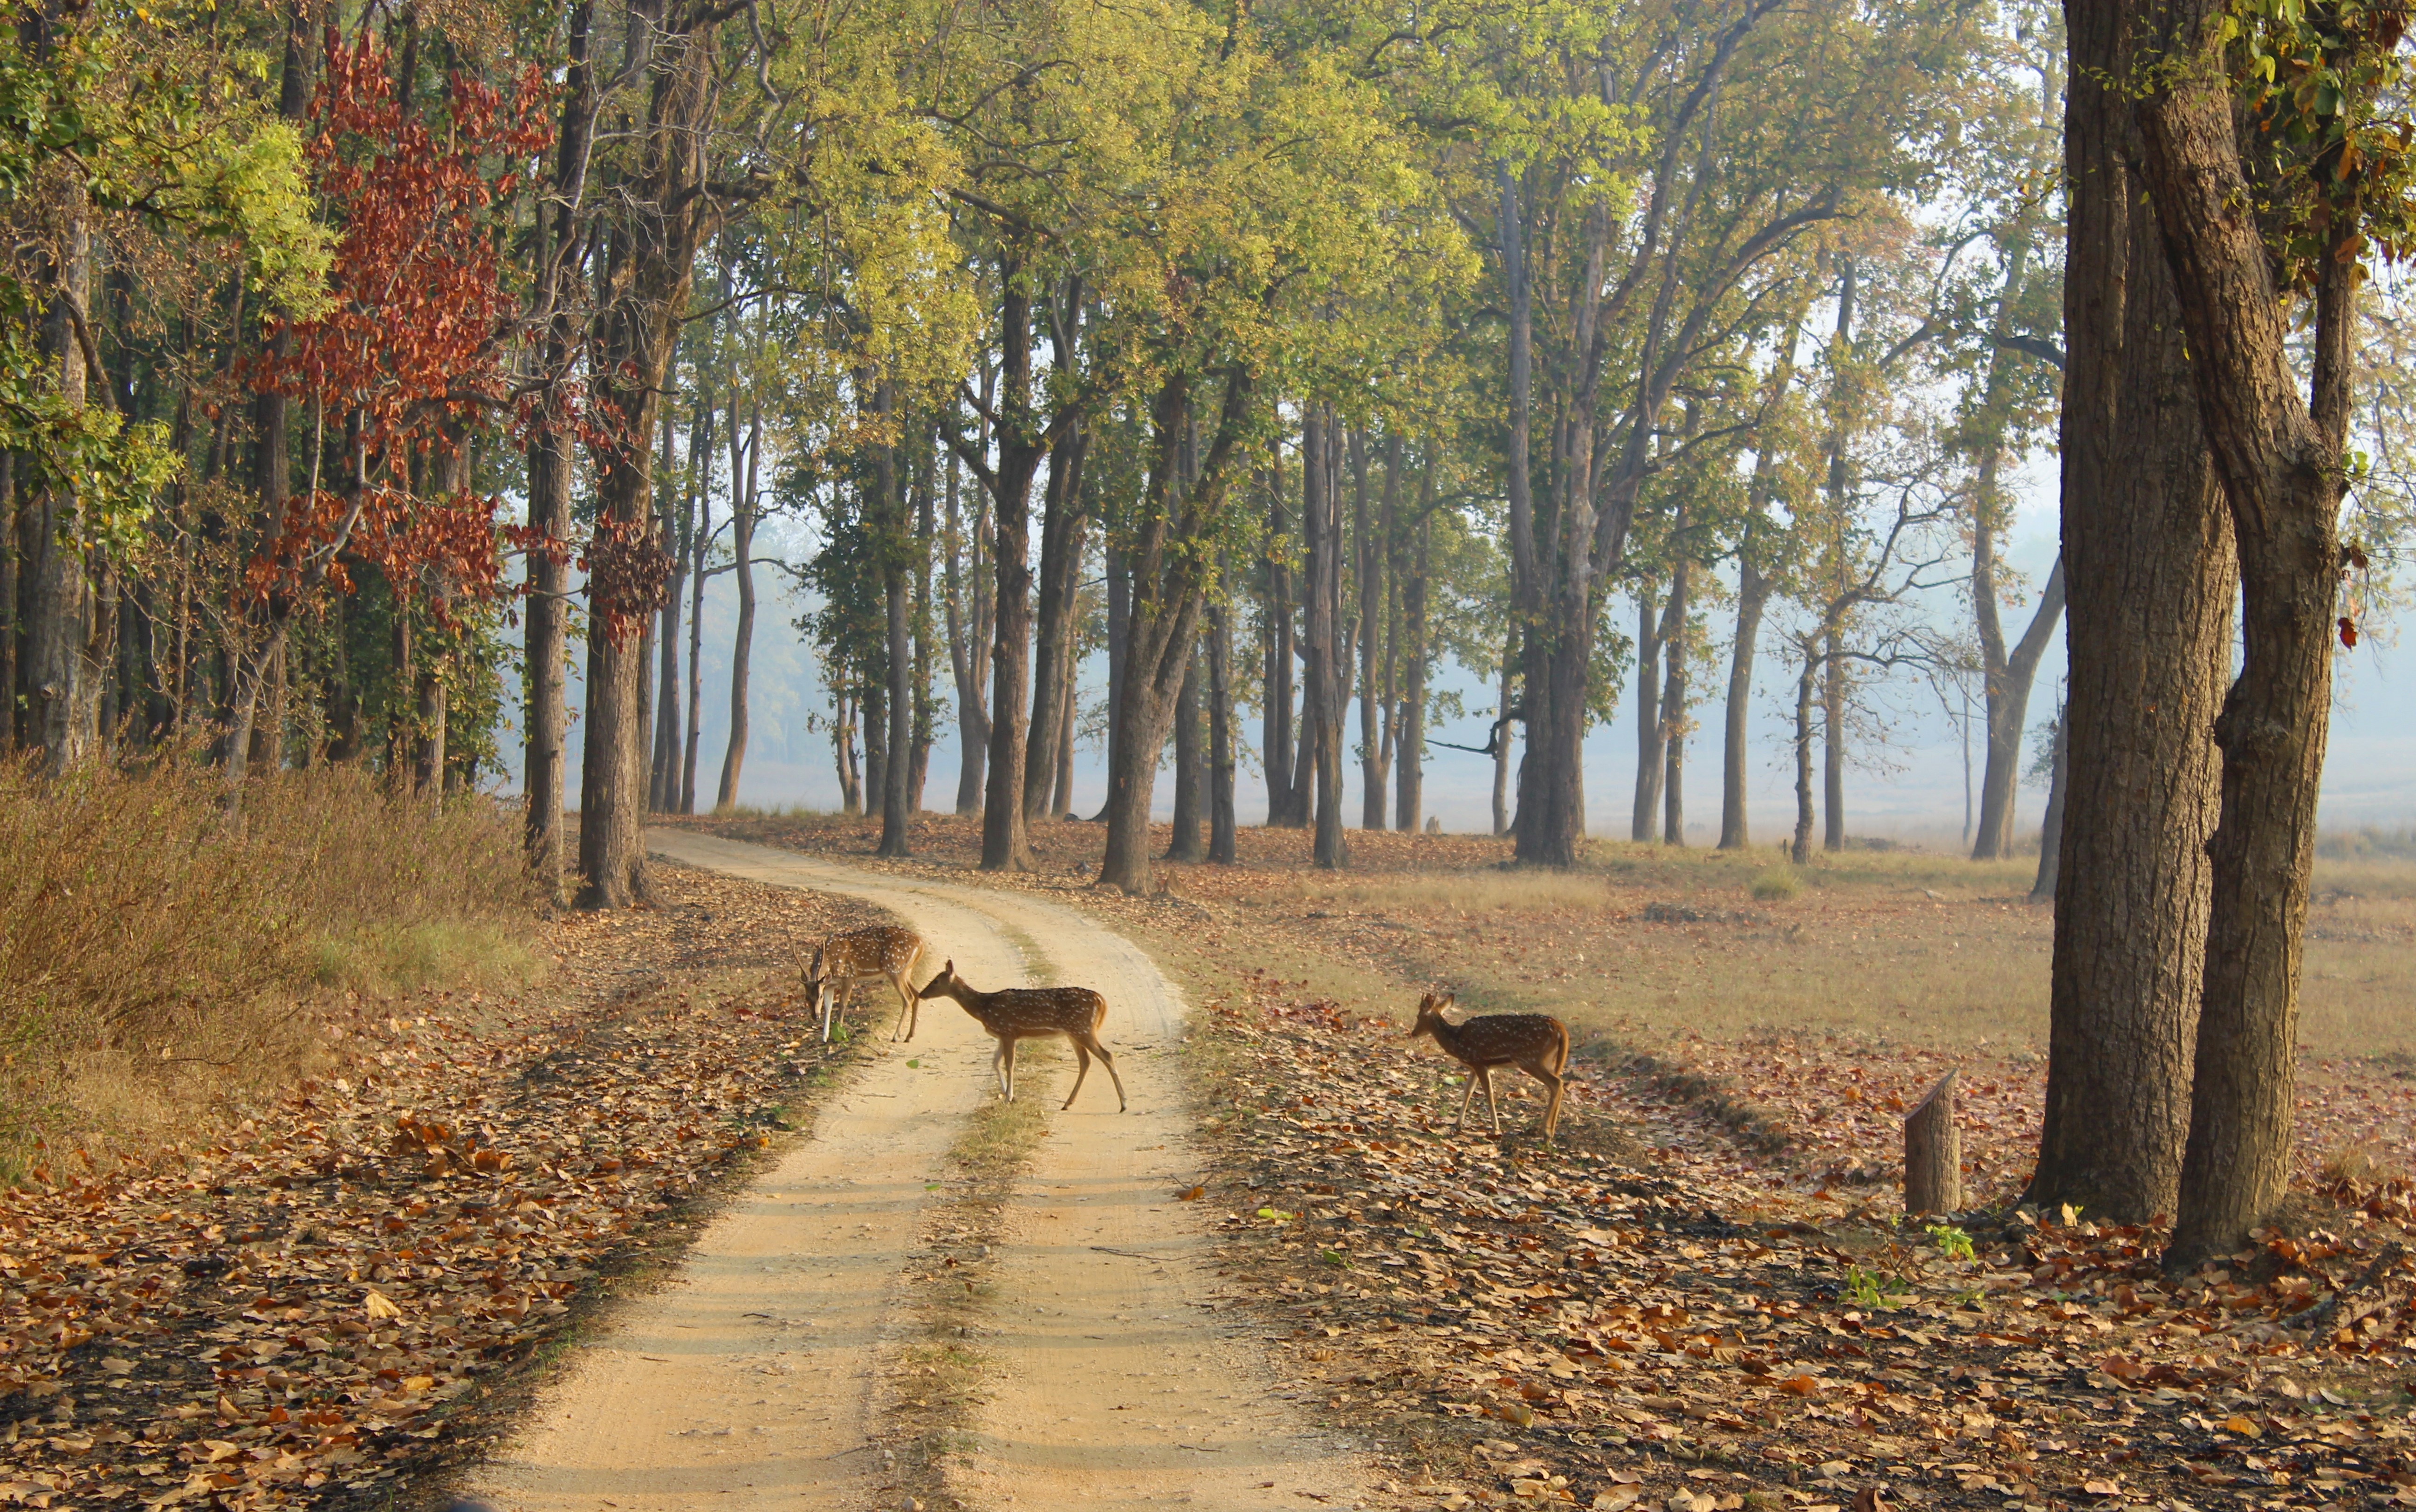 File:Deers crossing the safari trail.jpg - Wikimedia Commons